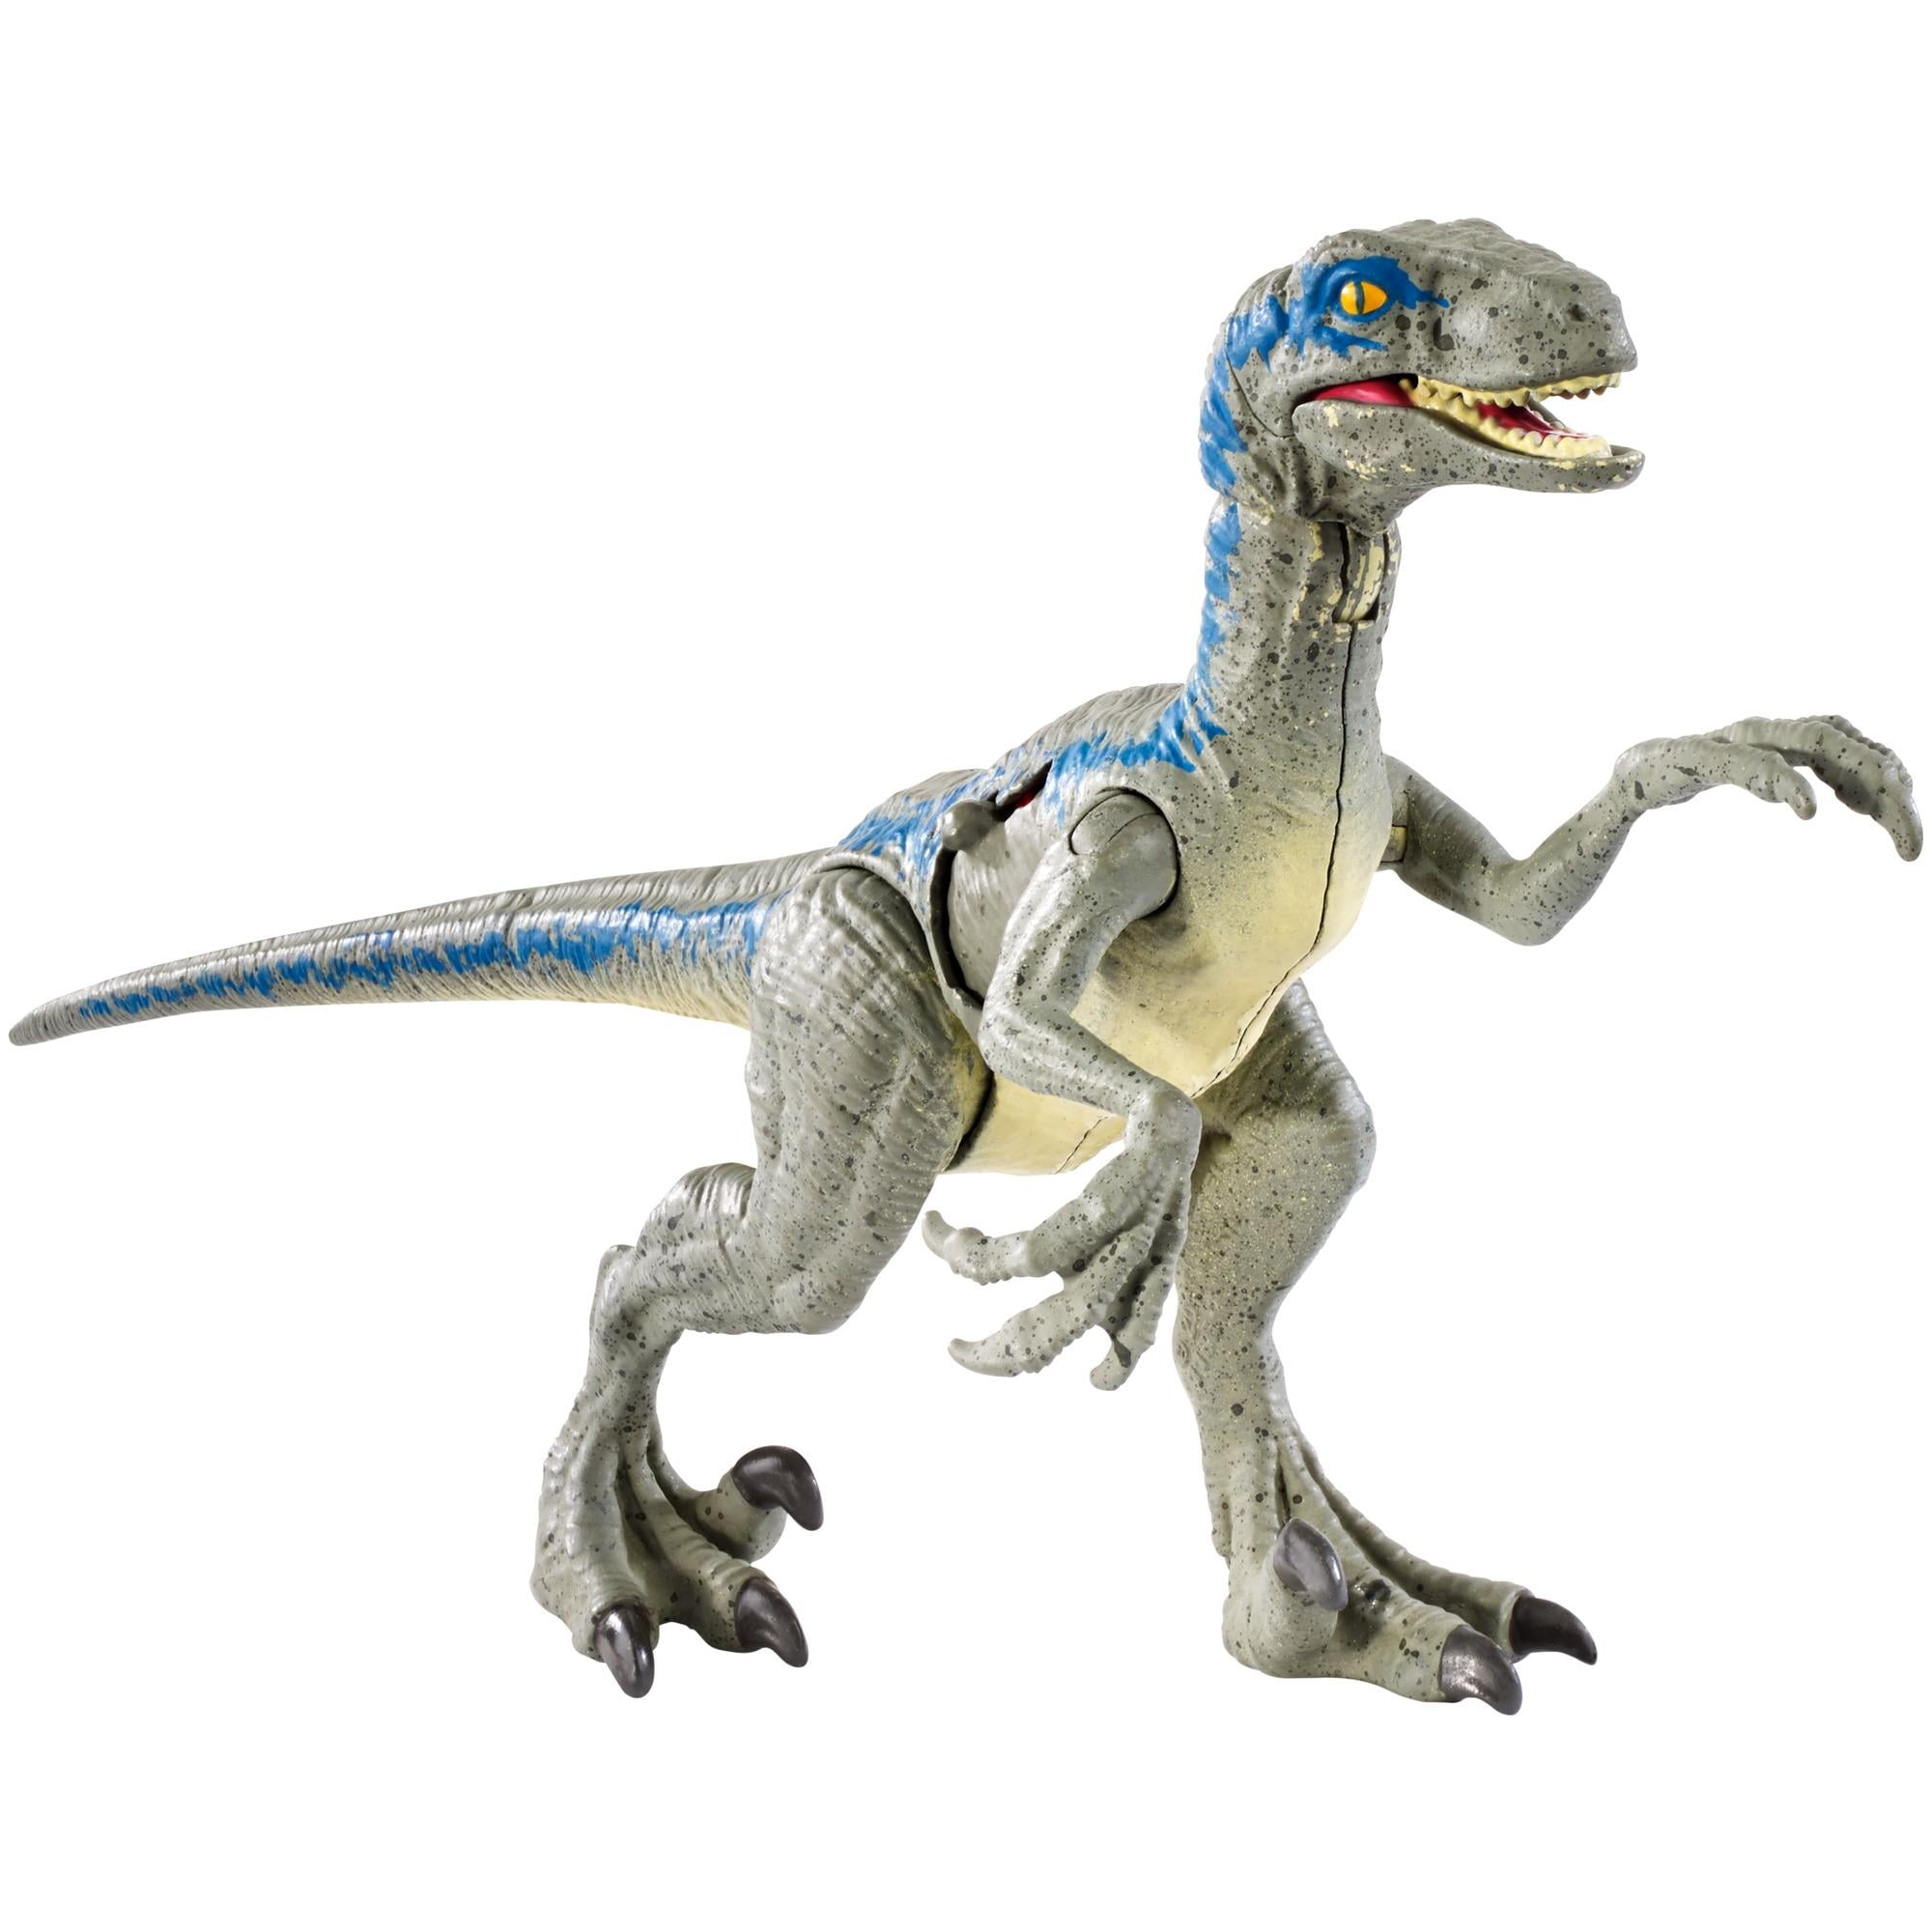 Jurassic Blue Velociraptor Dinosaur Model Toy Home Collector Decor Kids Gift New 